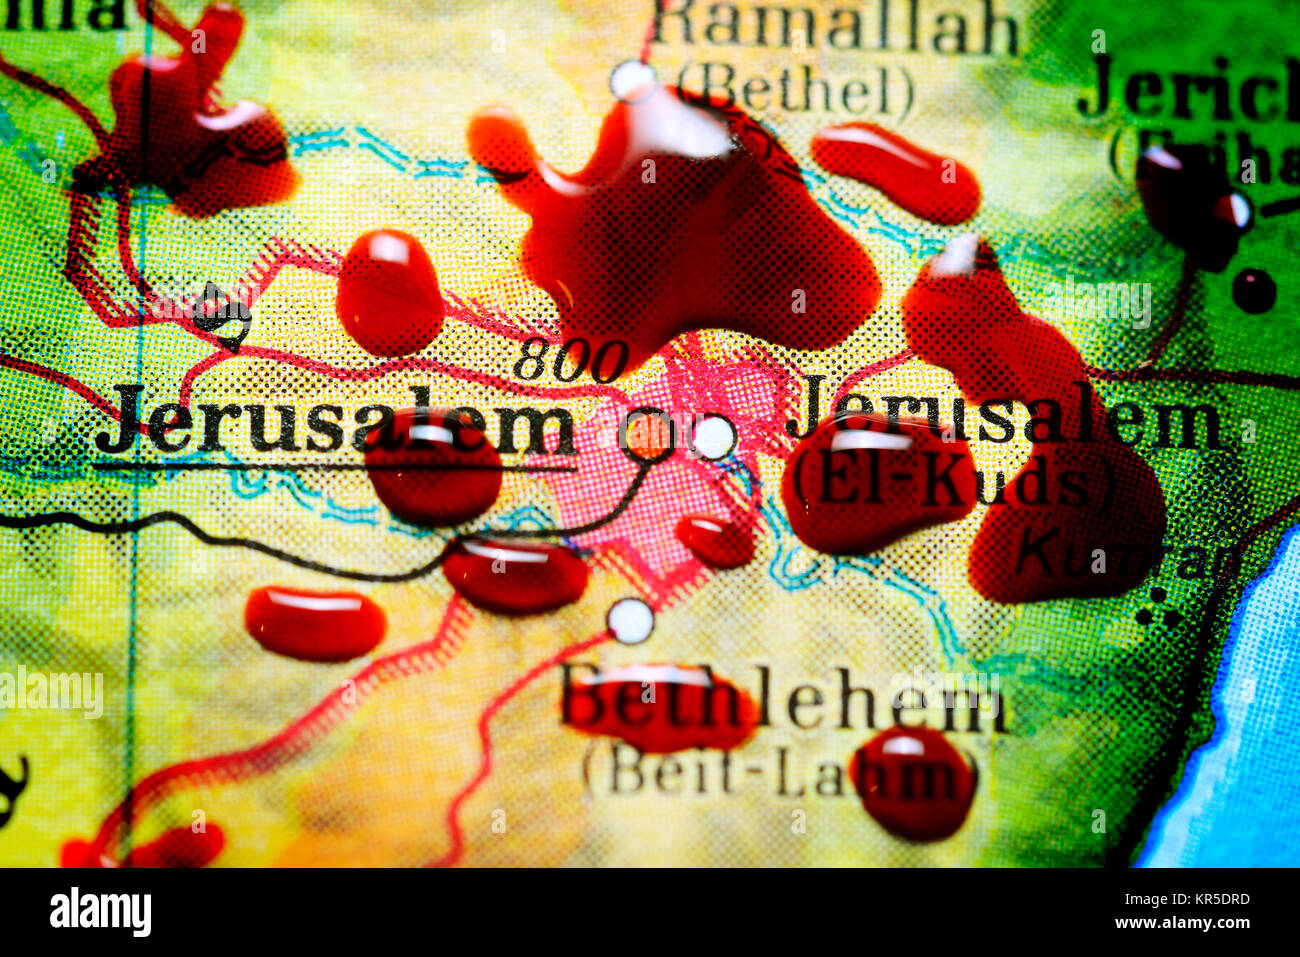 Jerusalem on a map with drop of blood, Jerusalem conflict, Jerusalem auf einer Landkarte mit Blutstropfen, Jerusalem-Konflikt Stock Photo